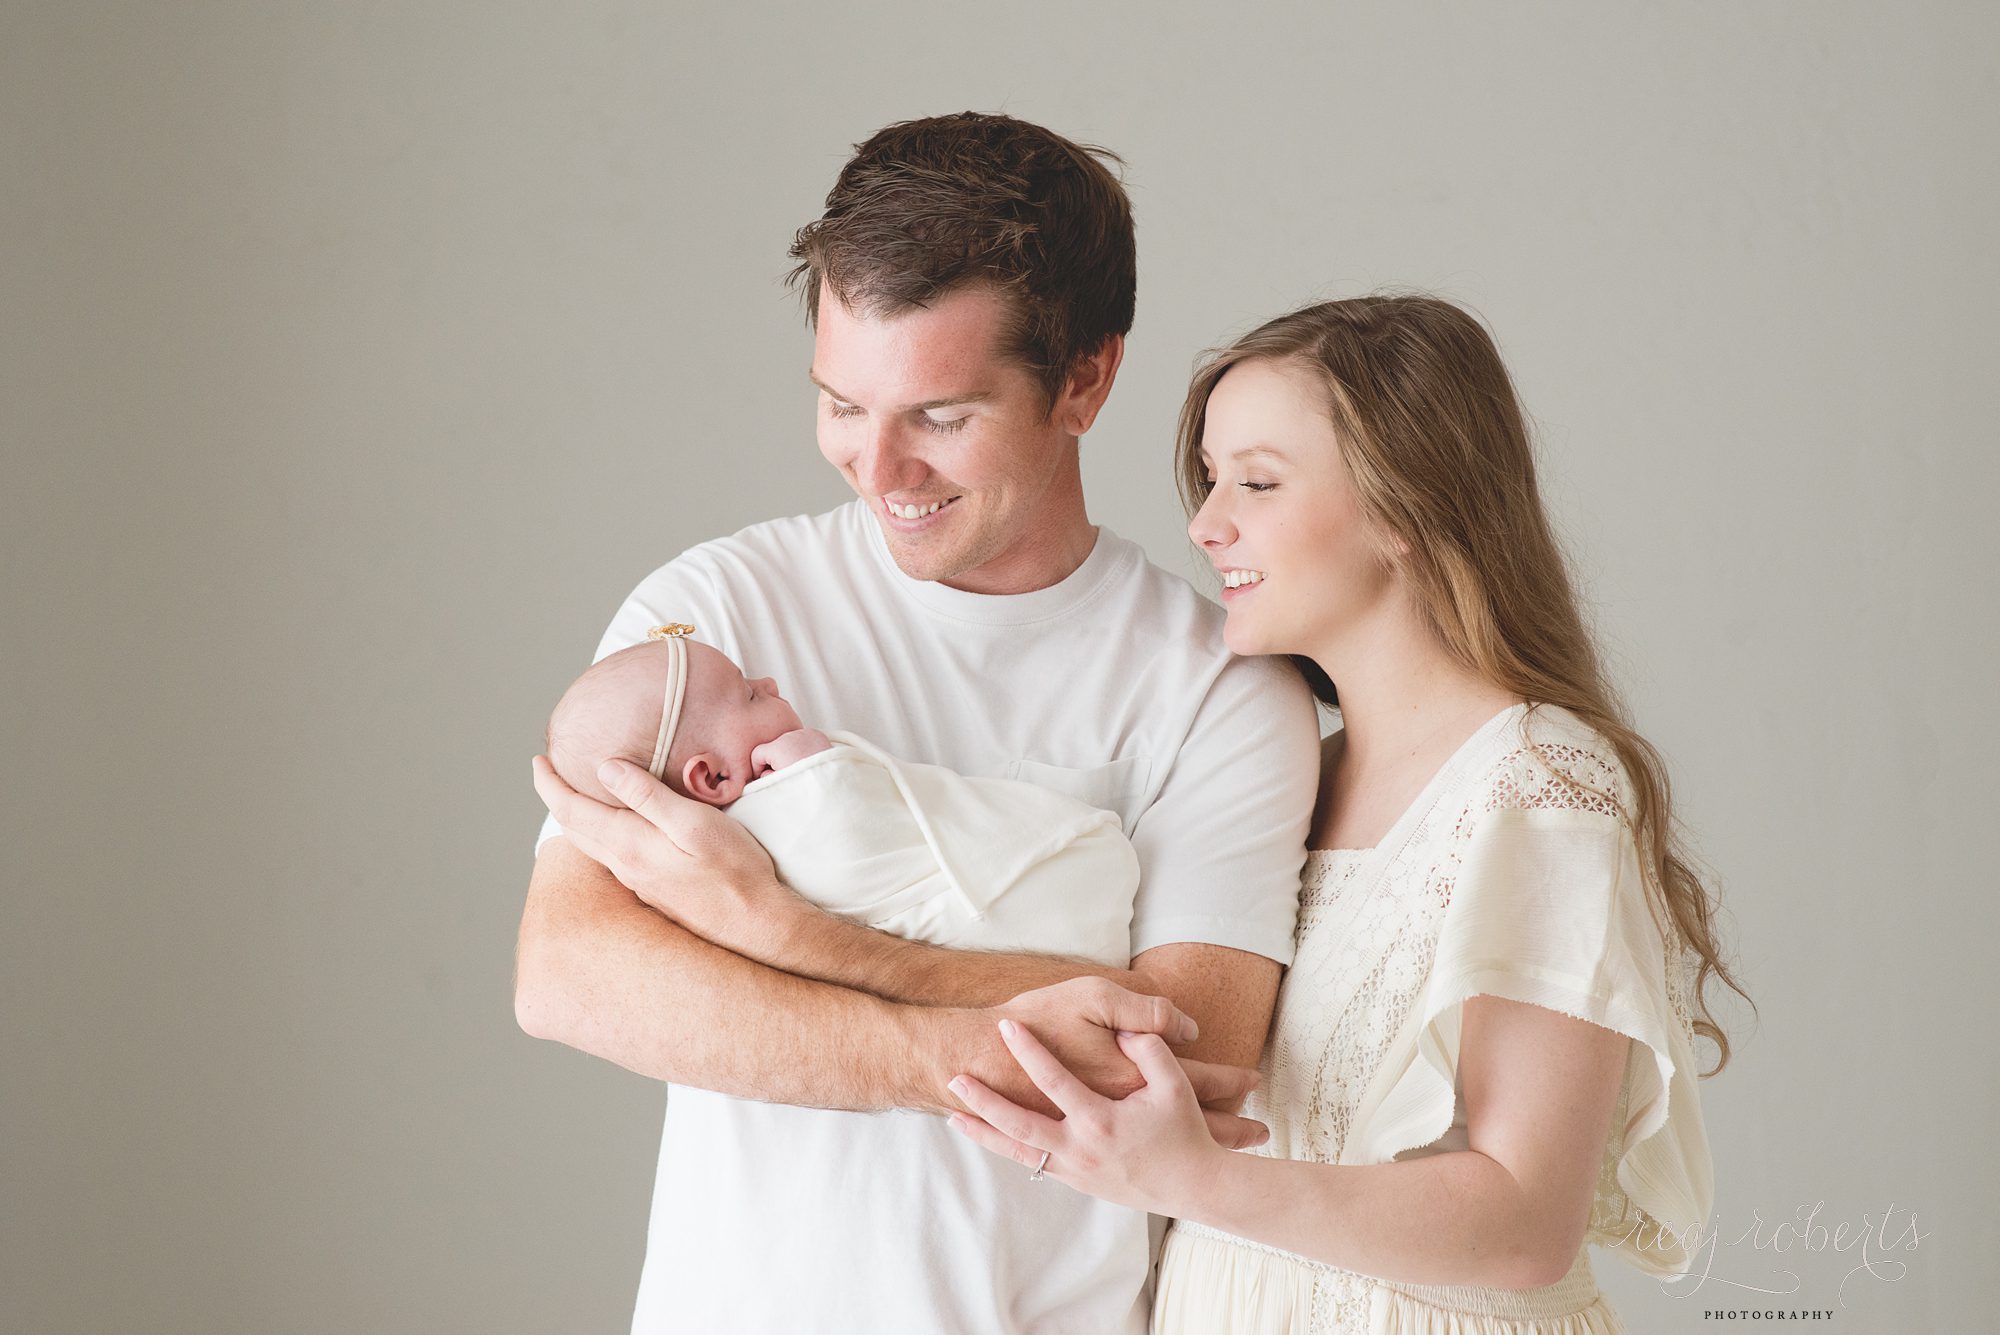 Smiling happy family holding newborn | Reaj Roberts Photography